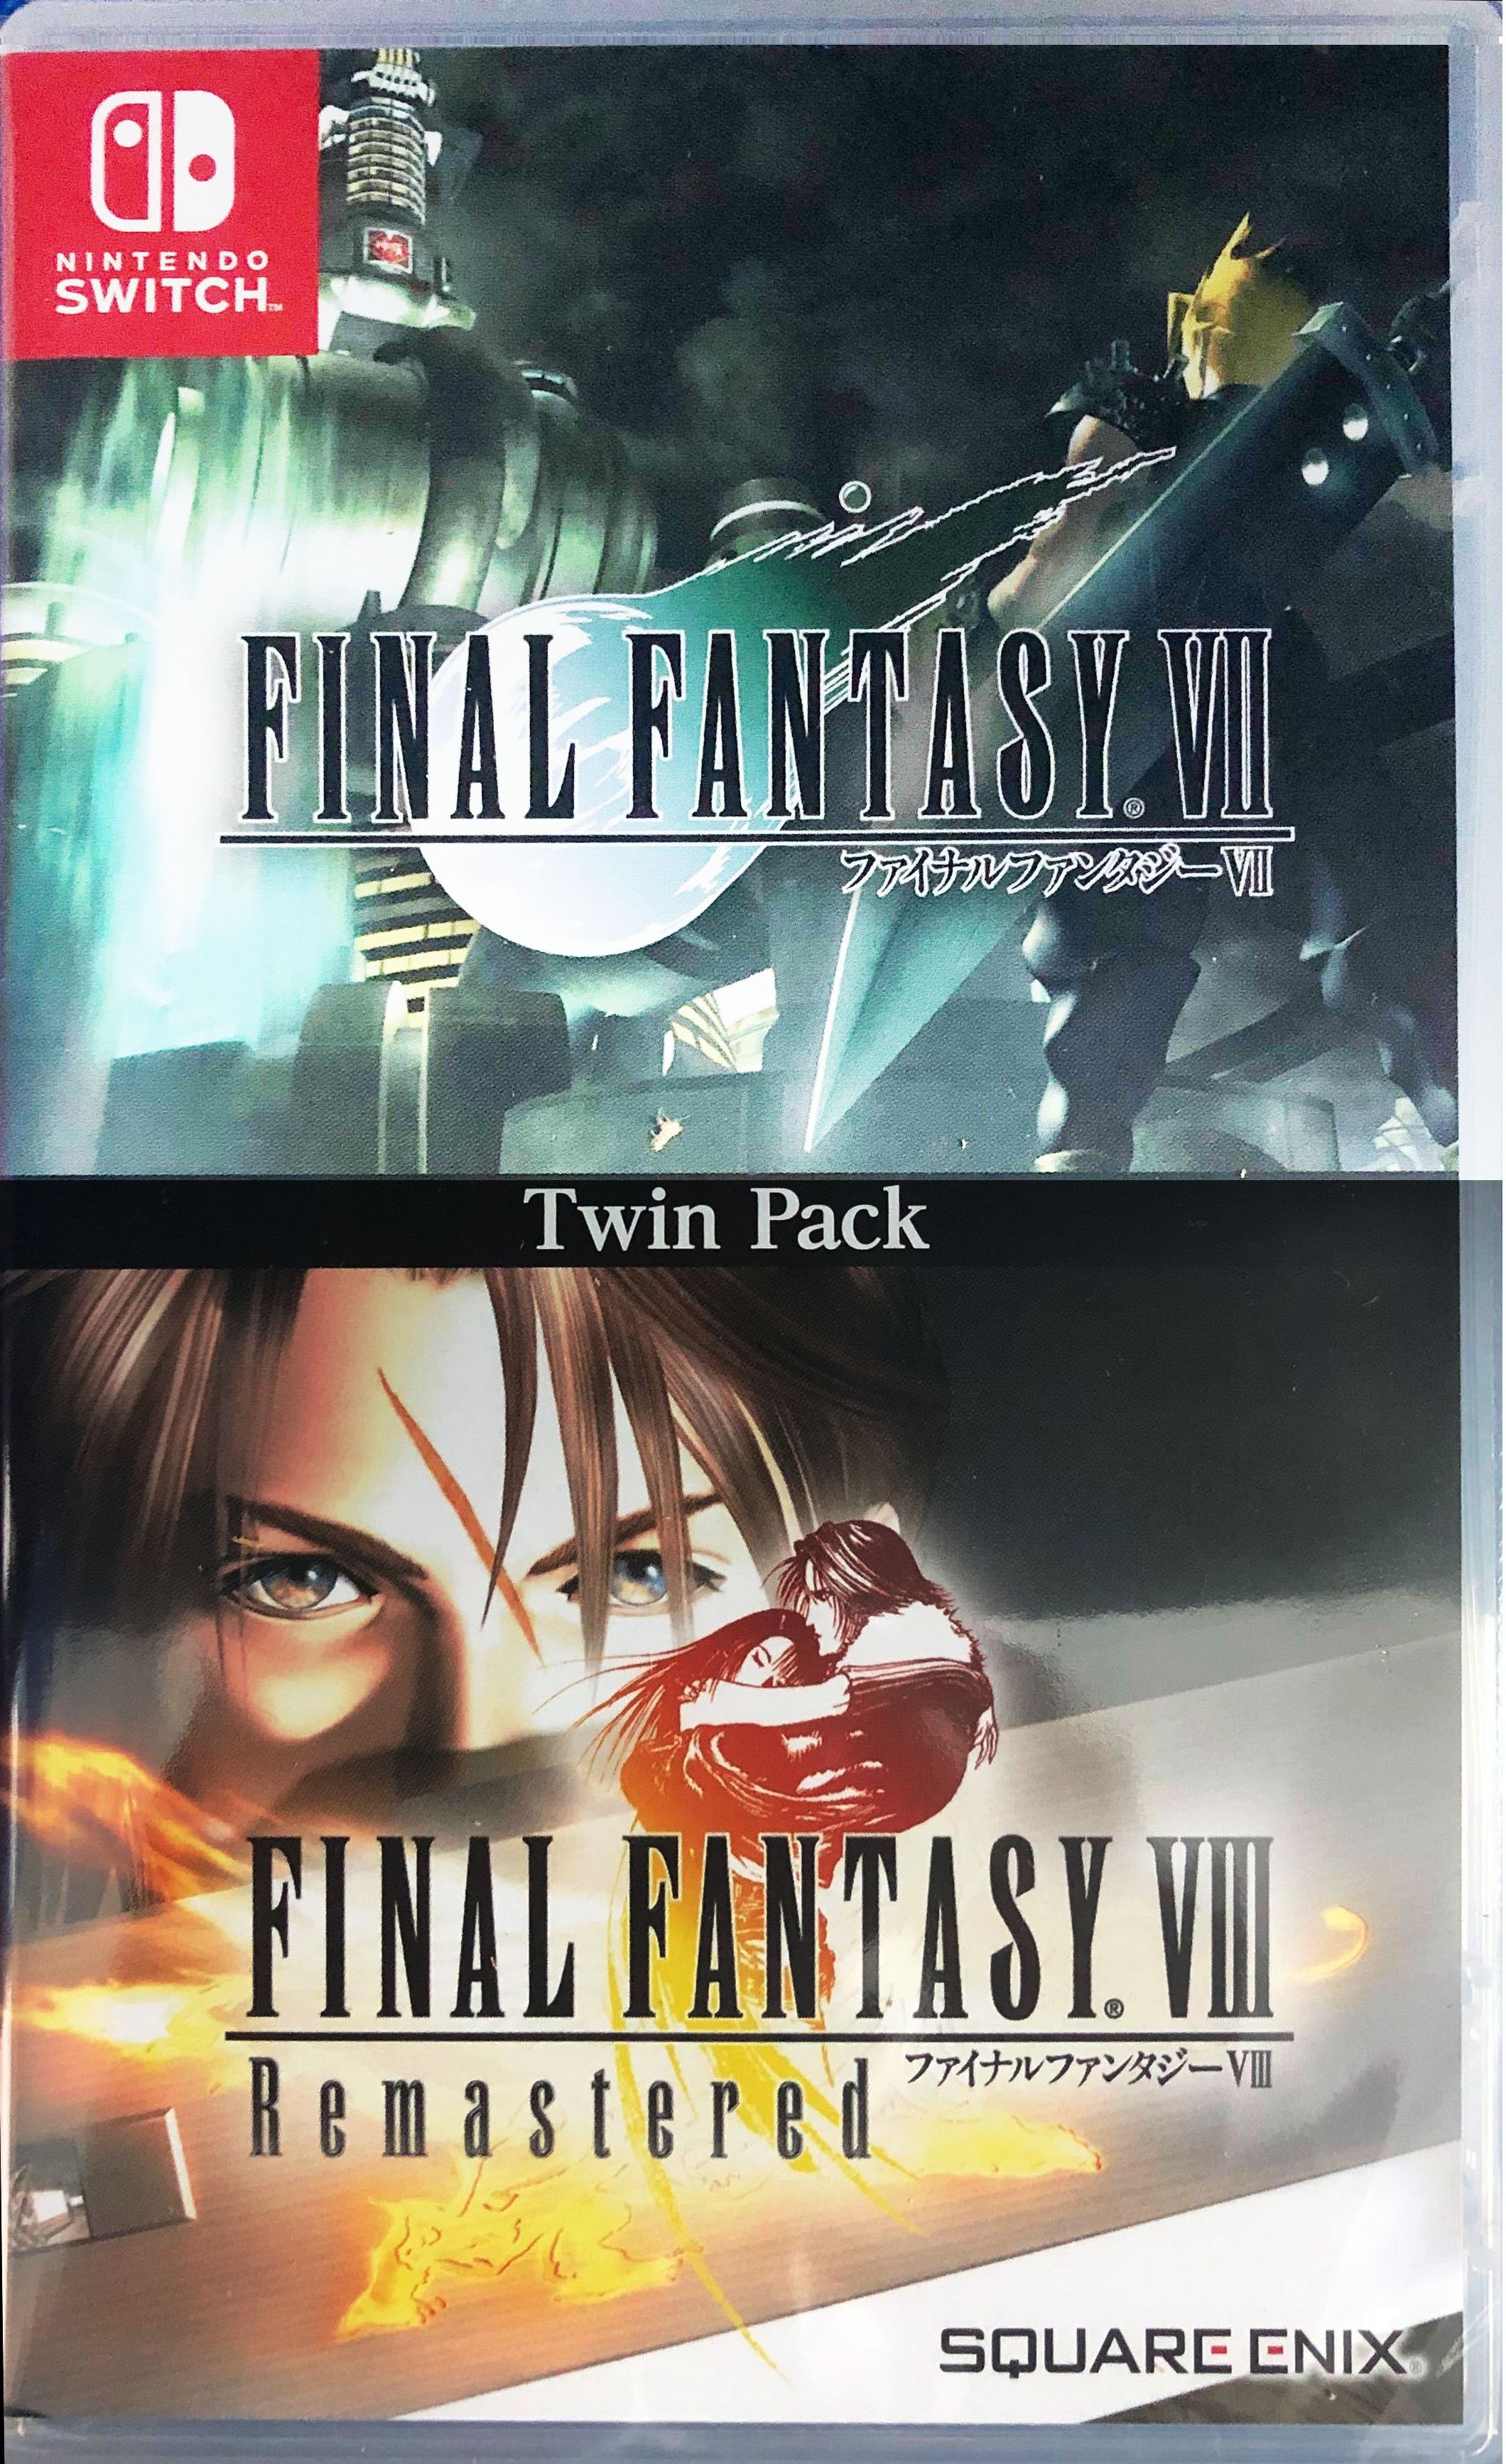 Final Fantasy Vii Final Fantasy Viii Remastered Twin Pack Multi Language Japan Cover